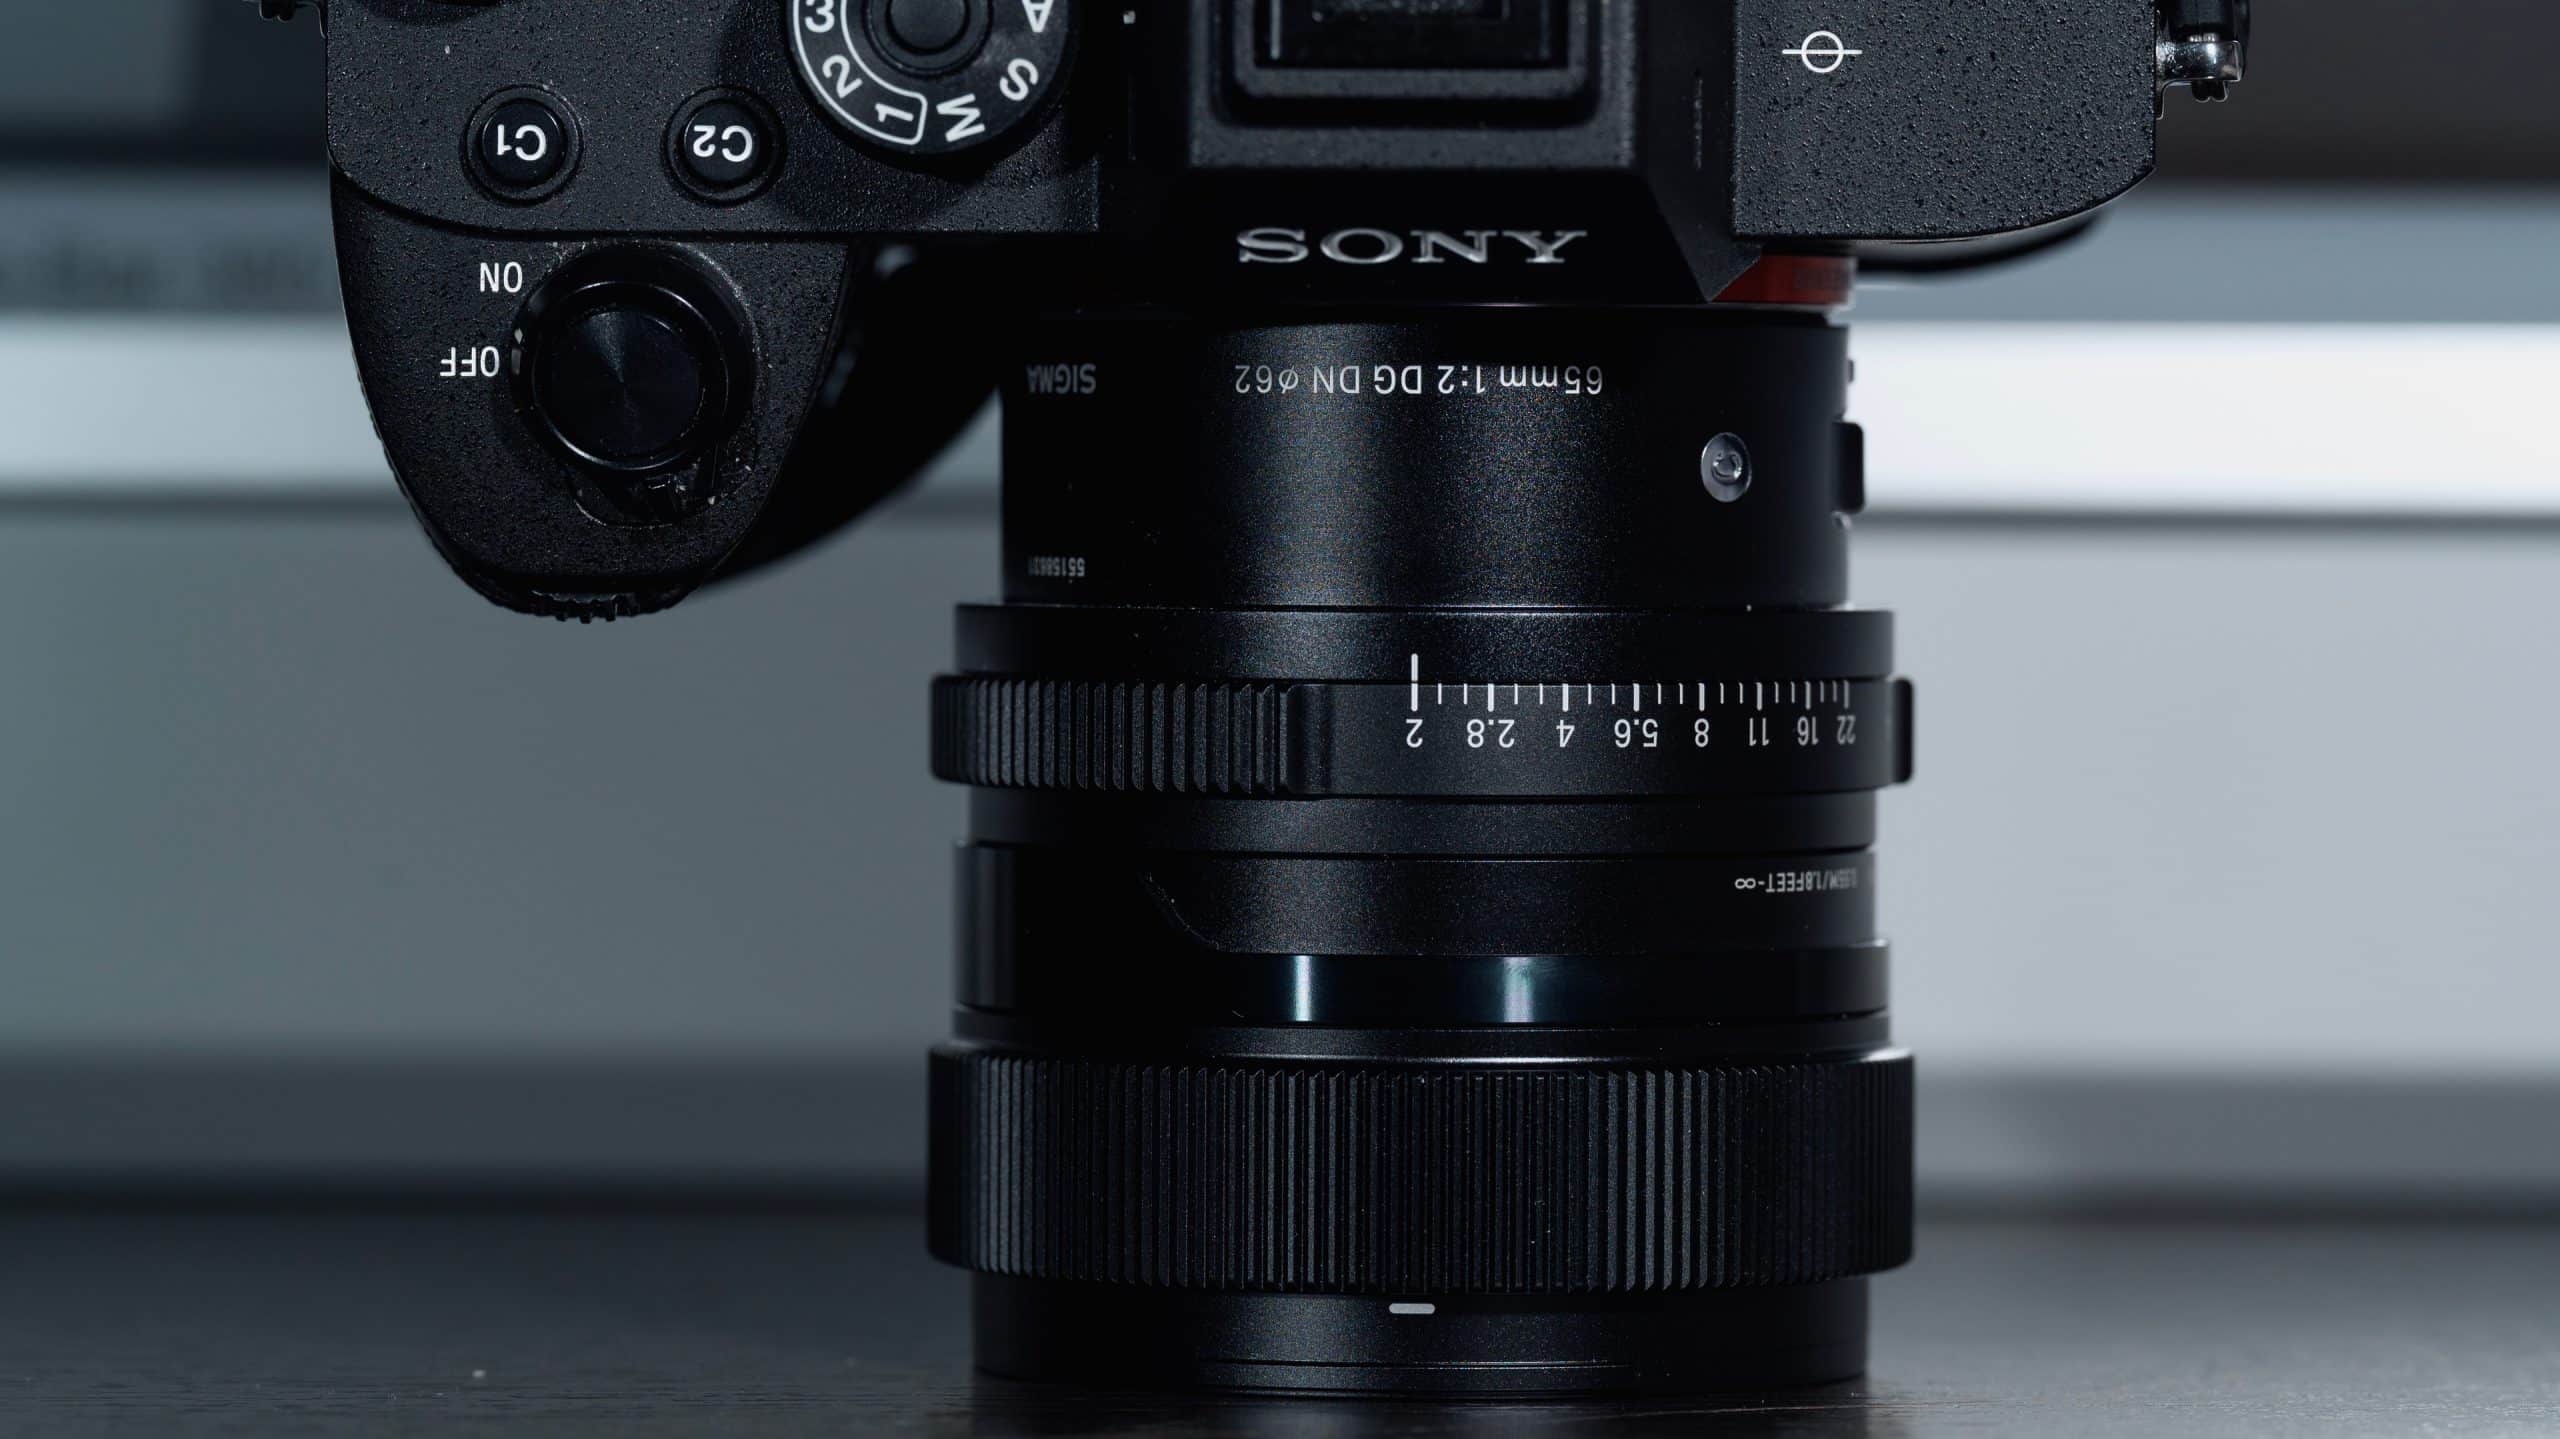 Ống kính Sigma 65mm F2 DG DN Contemporary cho Sony E